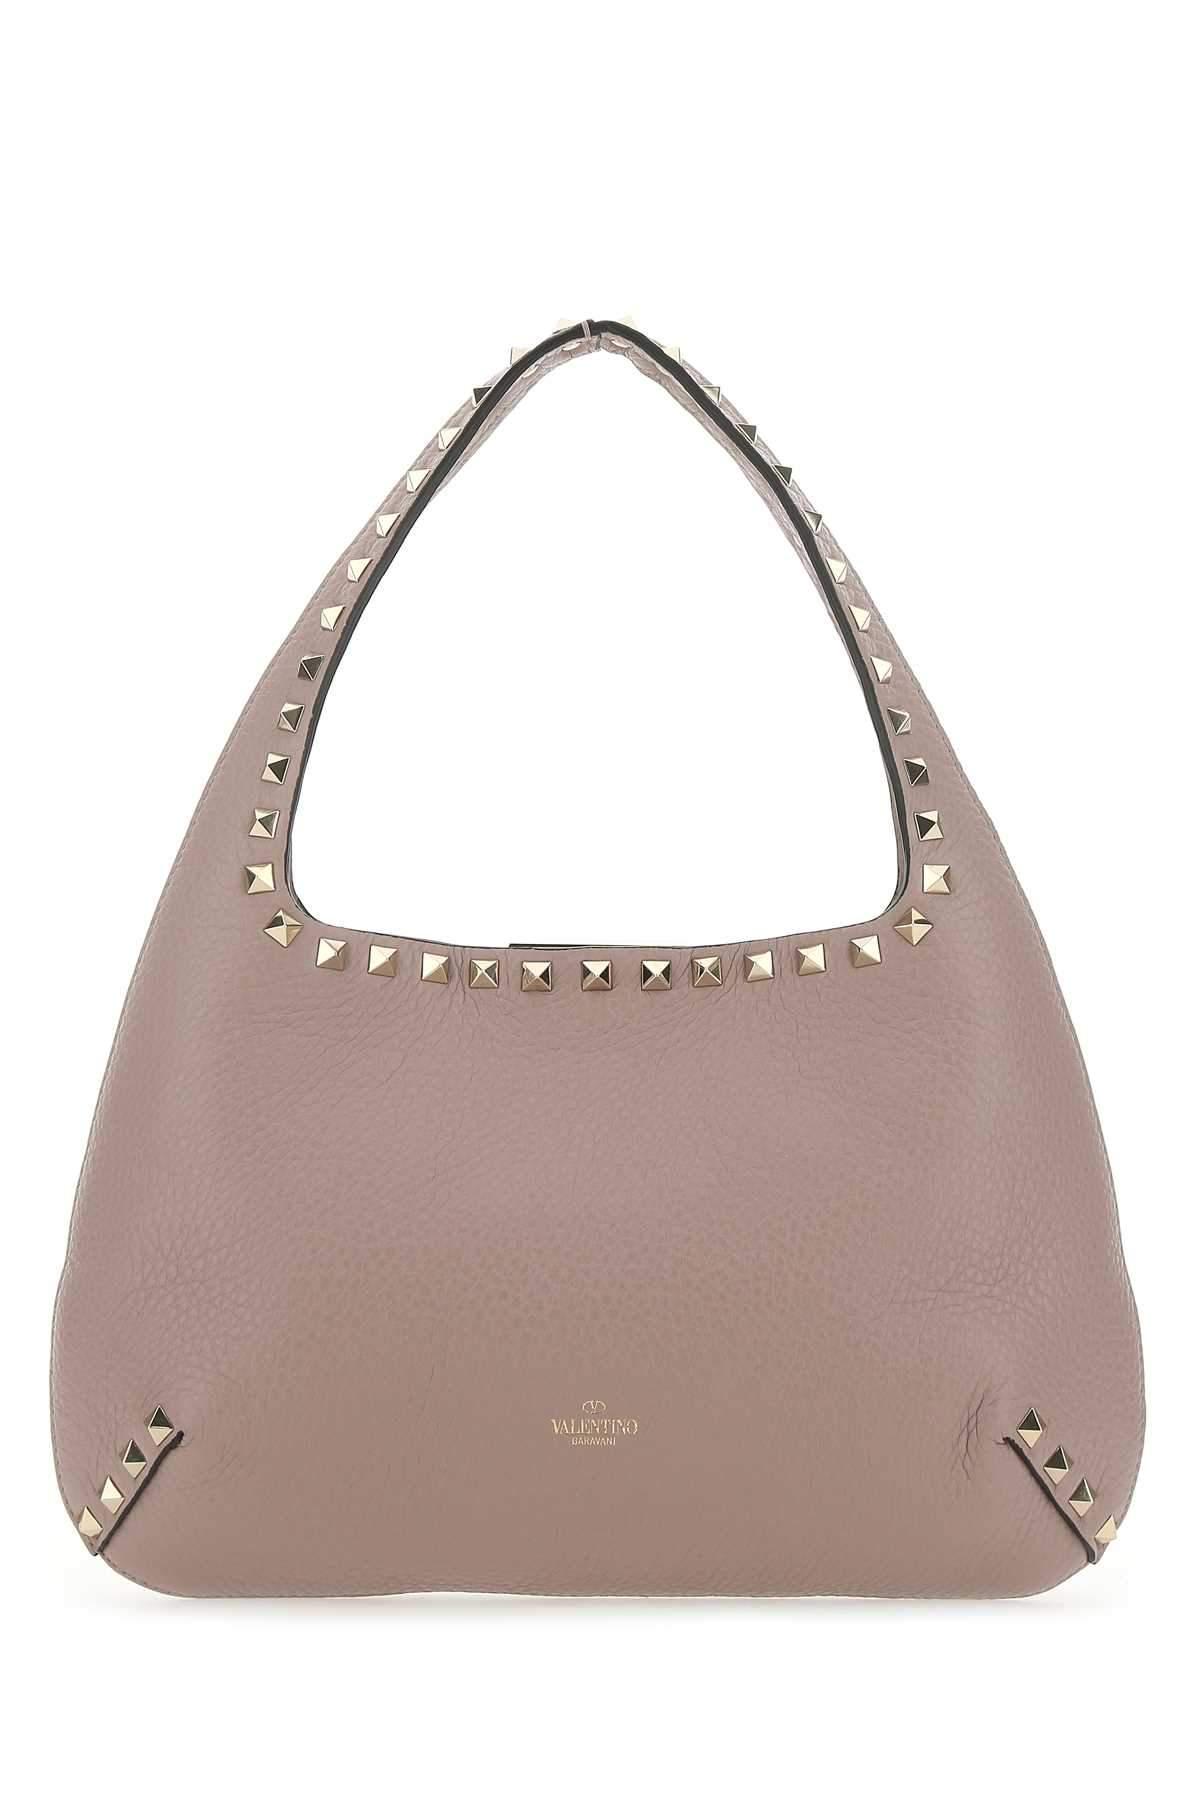 Valentino Leather Garavani Rockstud Small Hobo Bag in Pink - Lyst